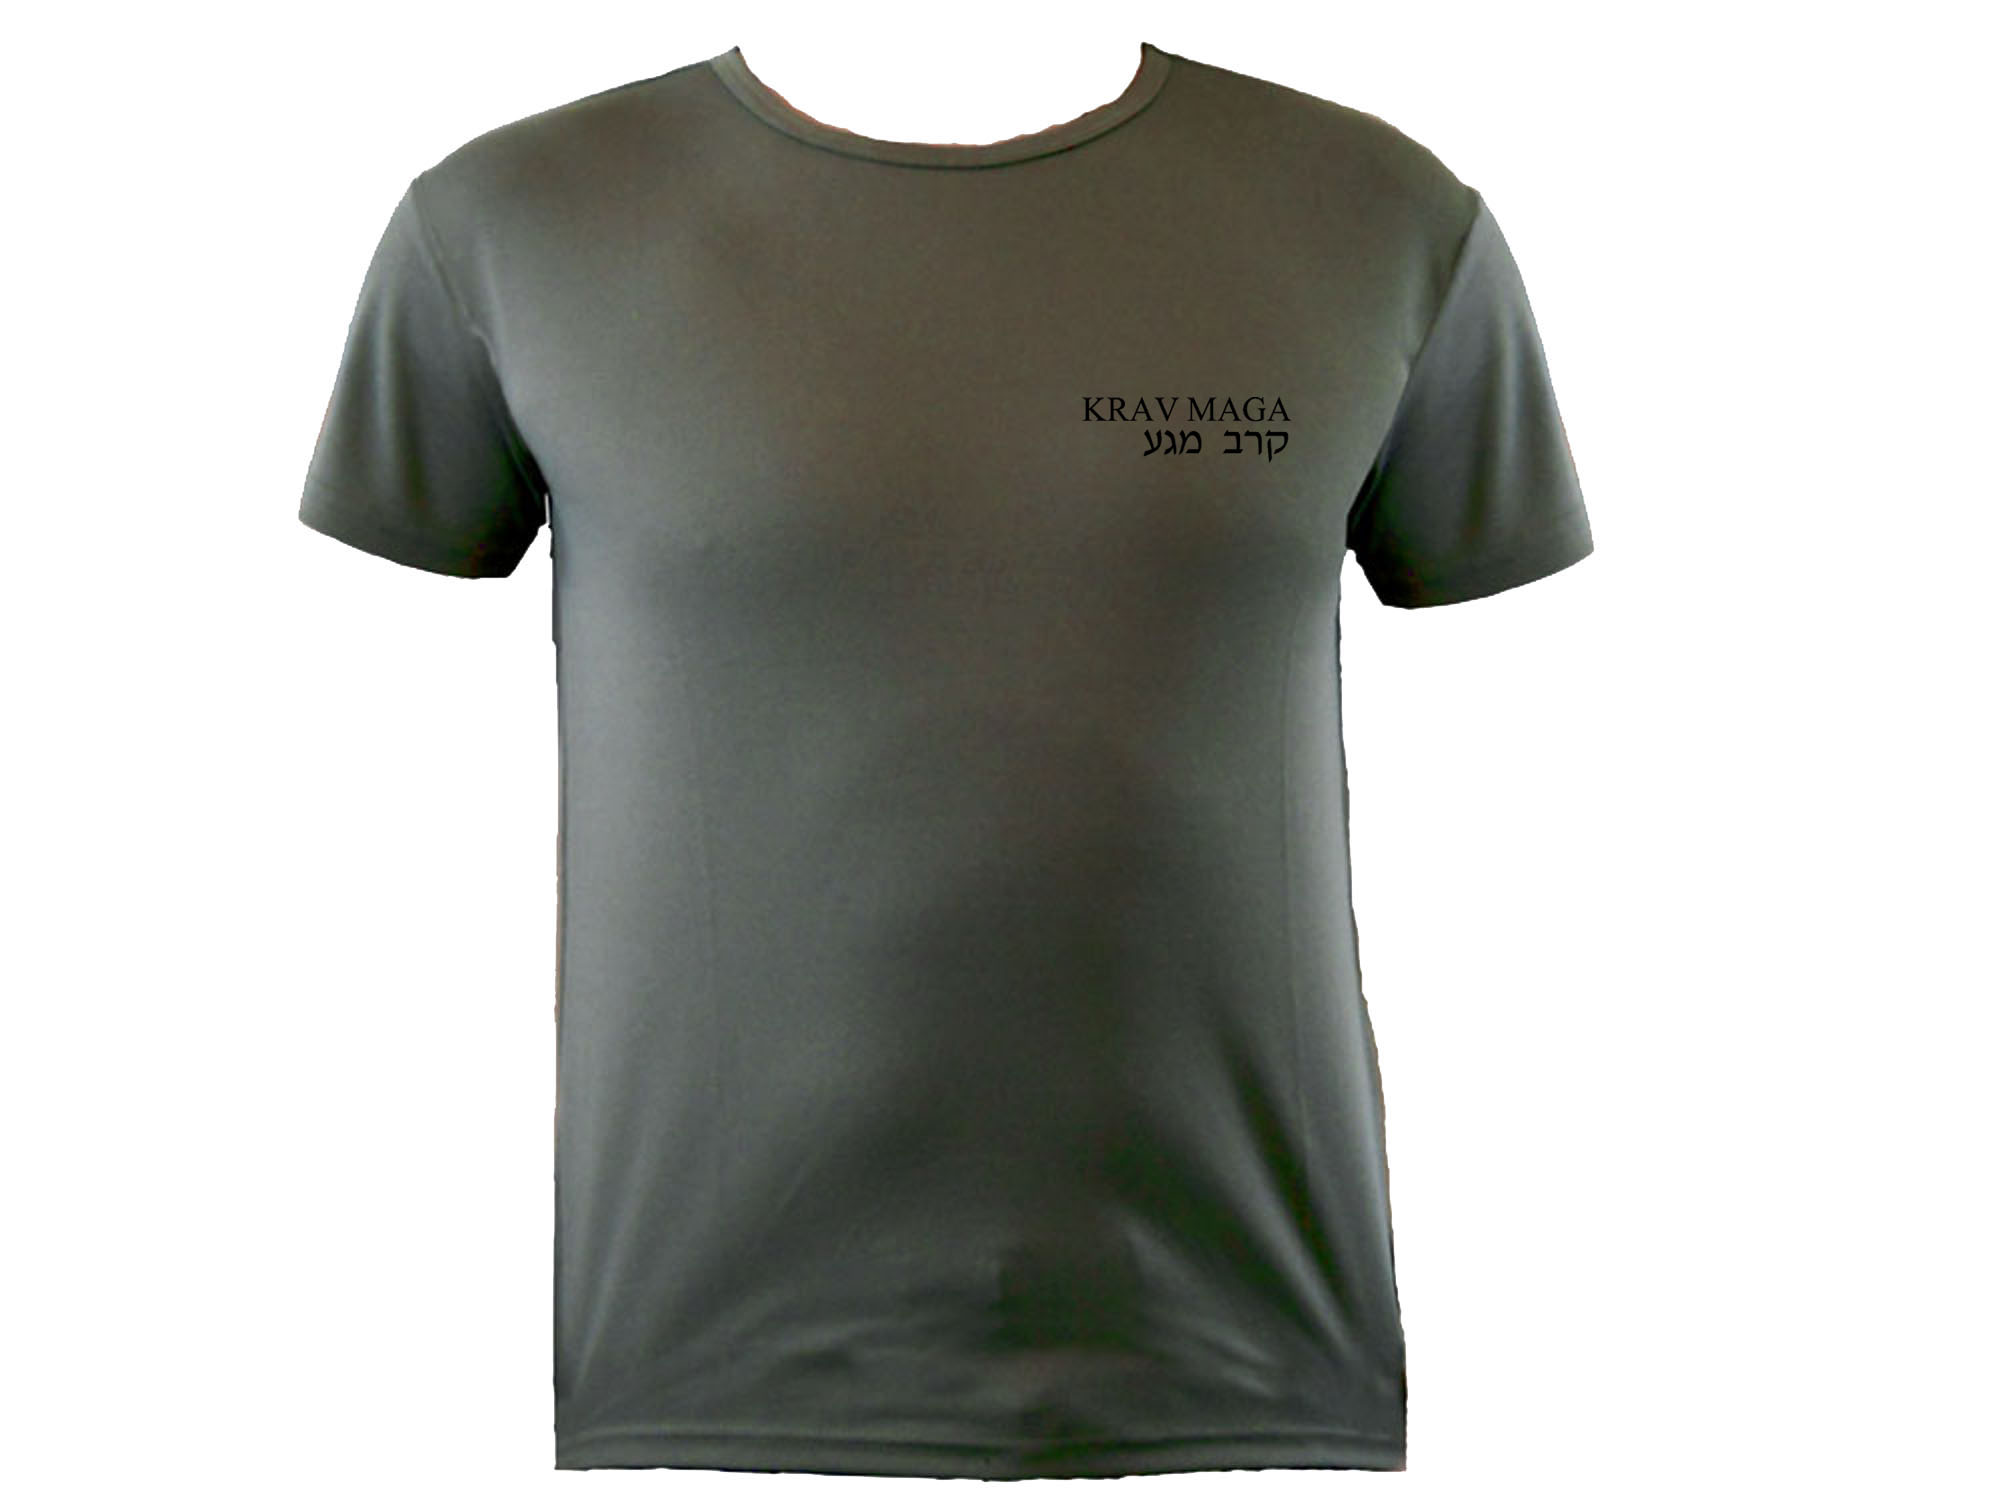 Krav Maga sweat proof polyester workout t-shirt